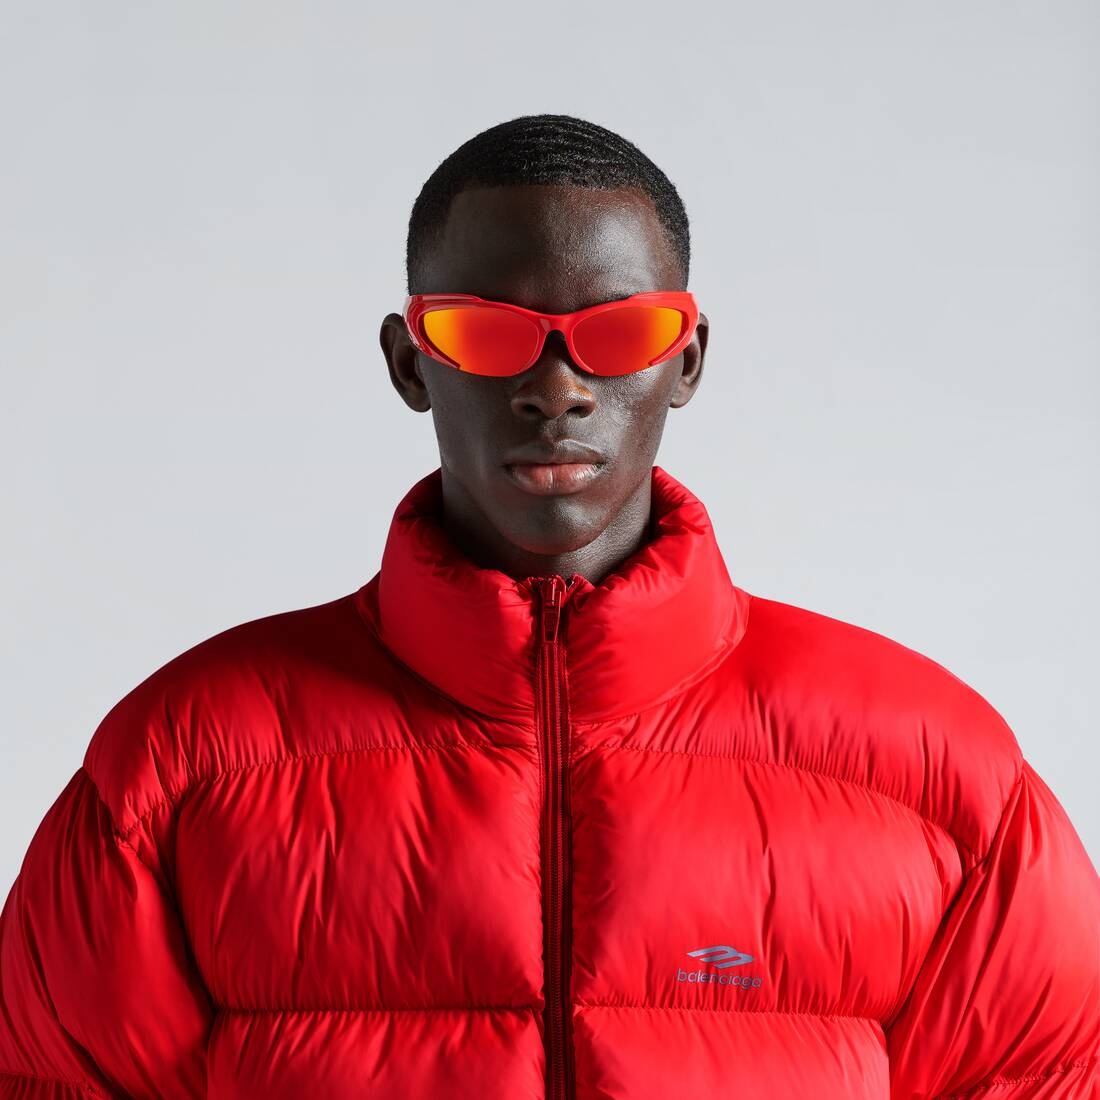 Skiwear - Reverse Xpander Rectangle Sunglasses in Red - 5